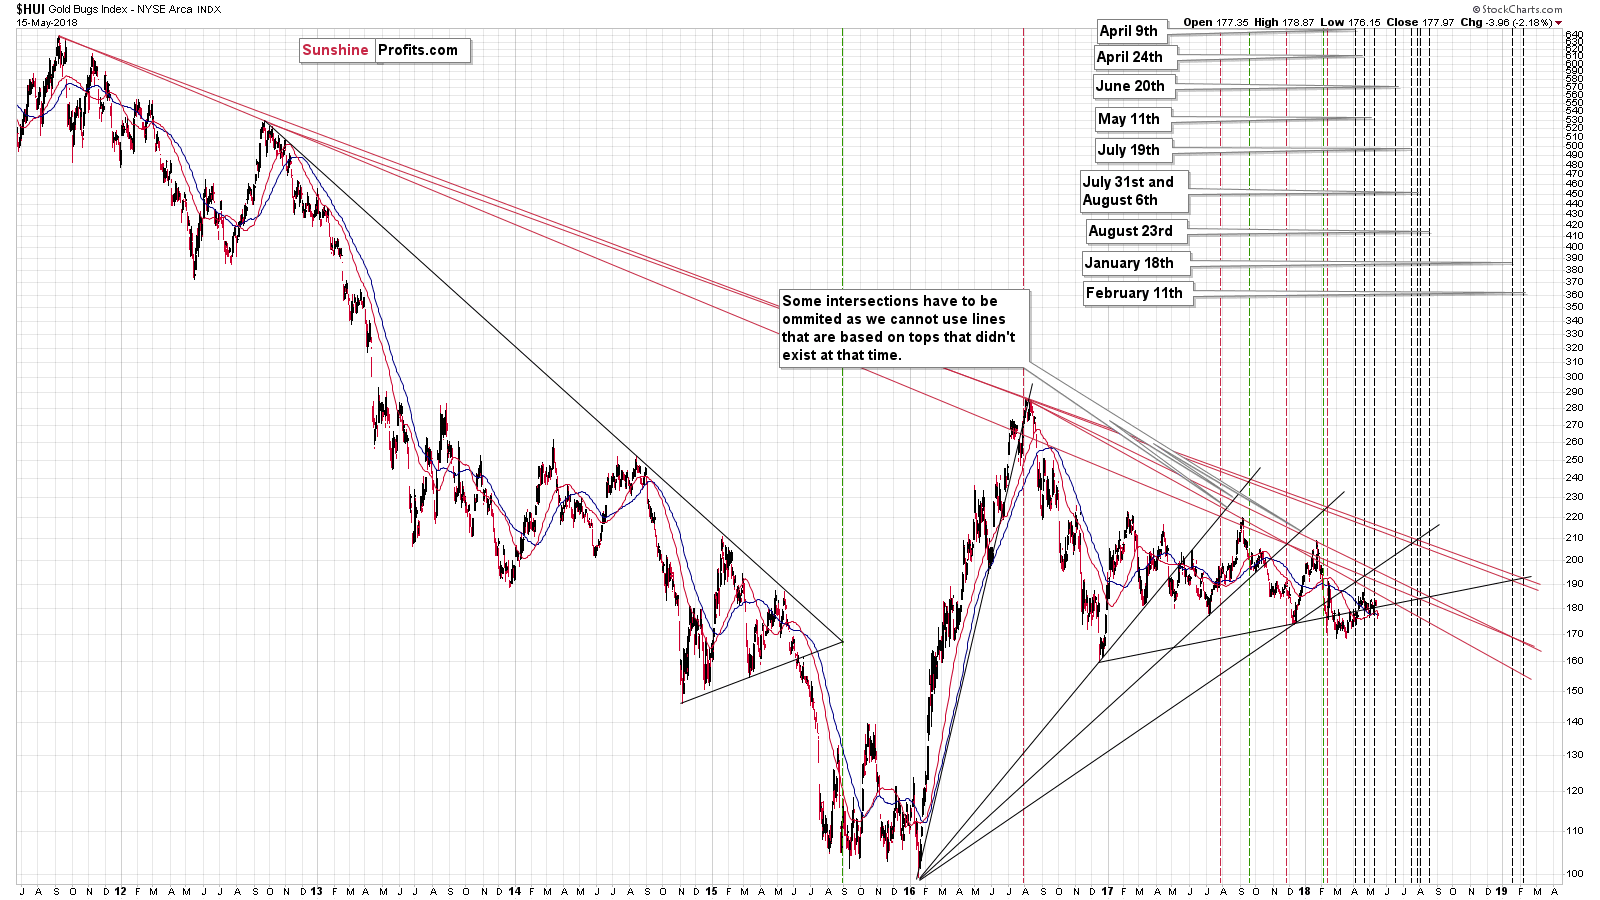 Gold stocks (HUI) - Triangle apex reversal